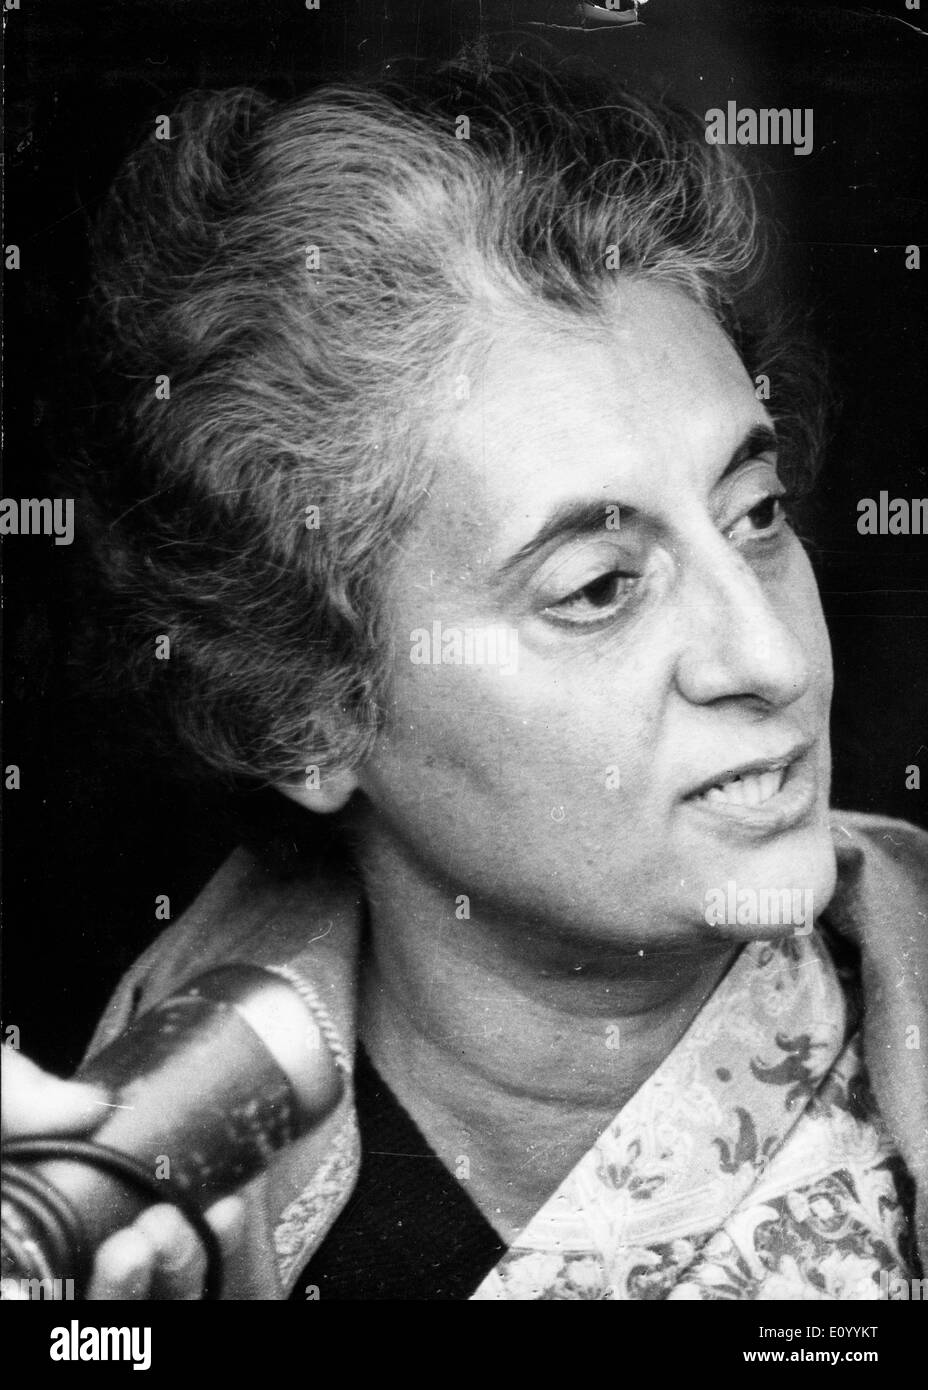 Prime Minister Indira Gandhi at press conference Stock Photo